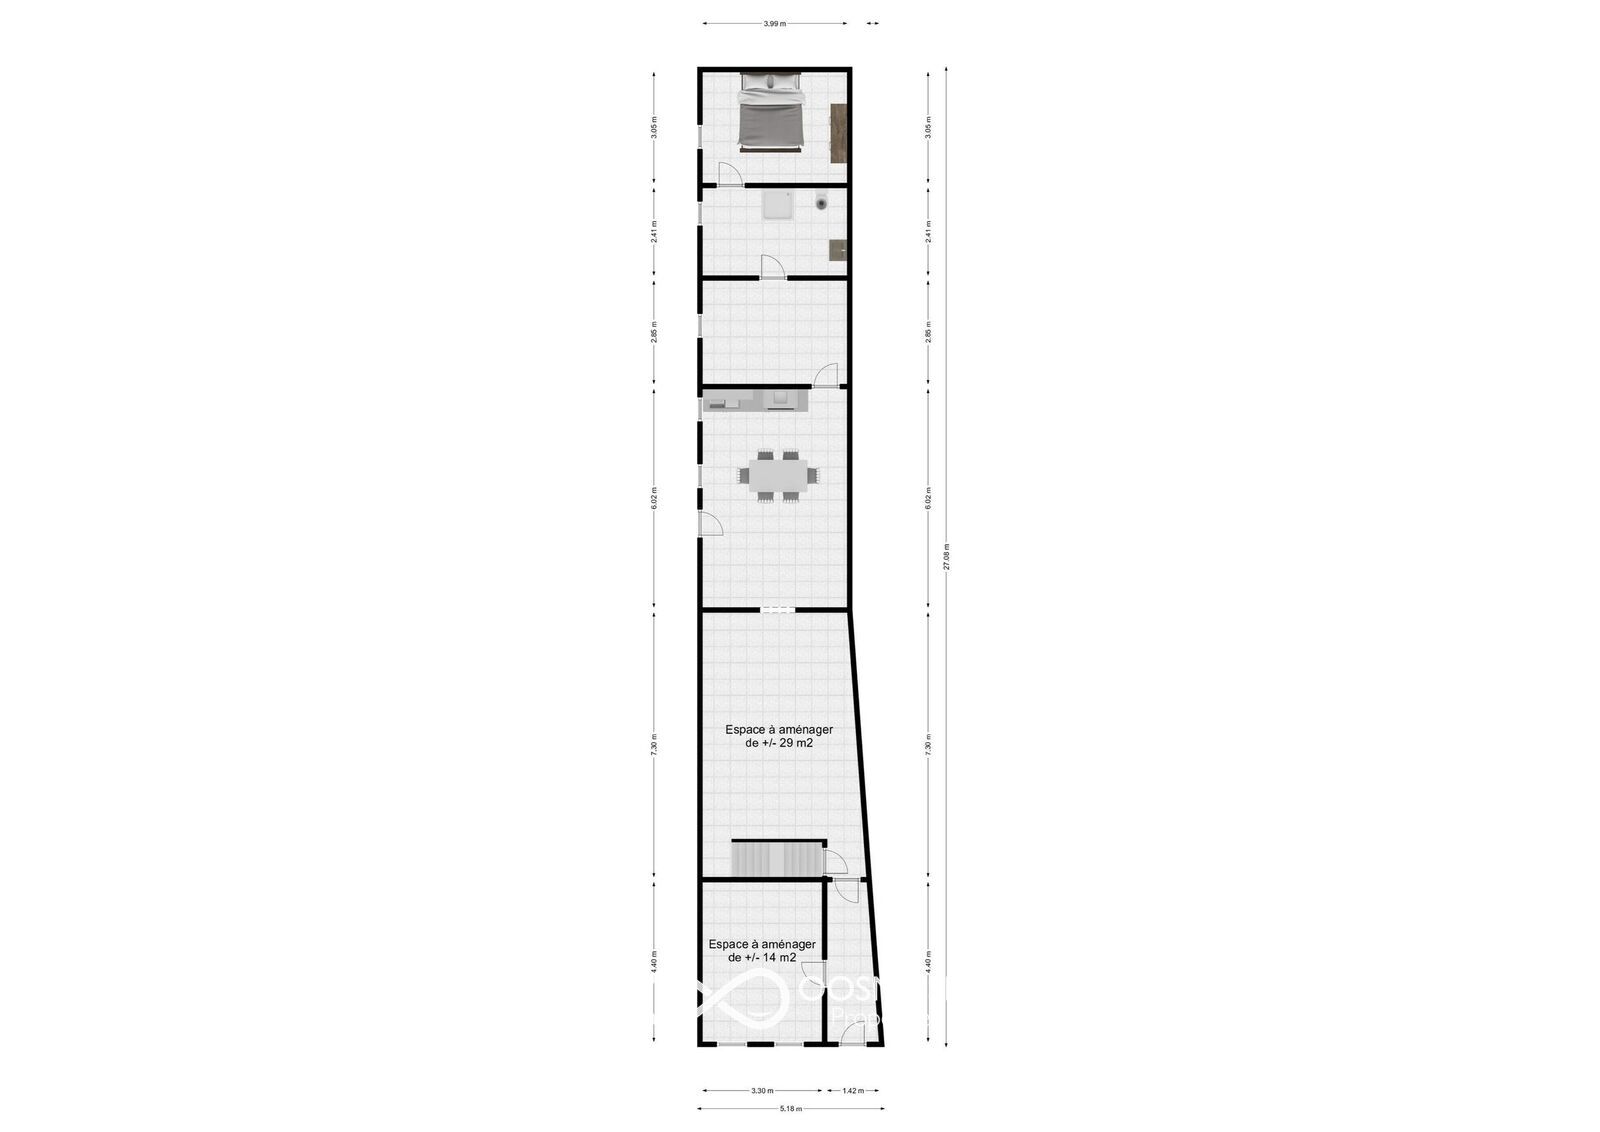 Maison à rénover à Momignies - 111037821 chantrenne 8 9 floor 1 first design 20211102 47a504